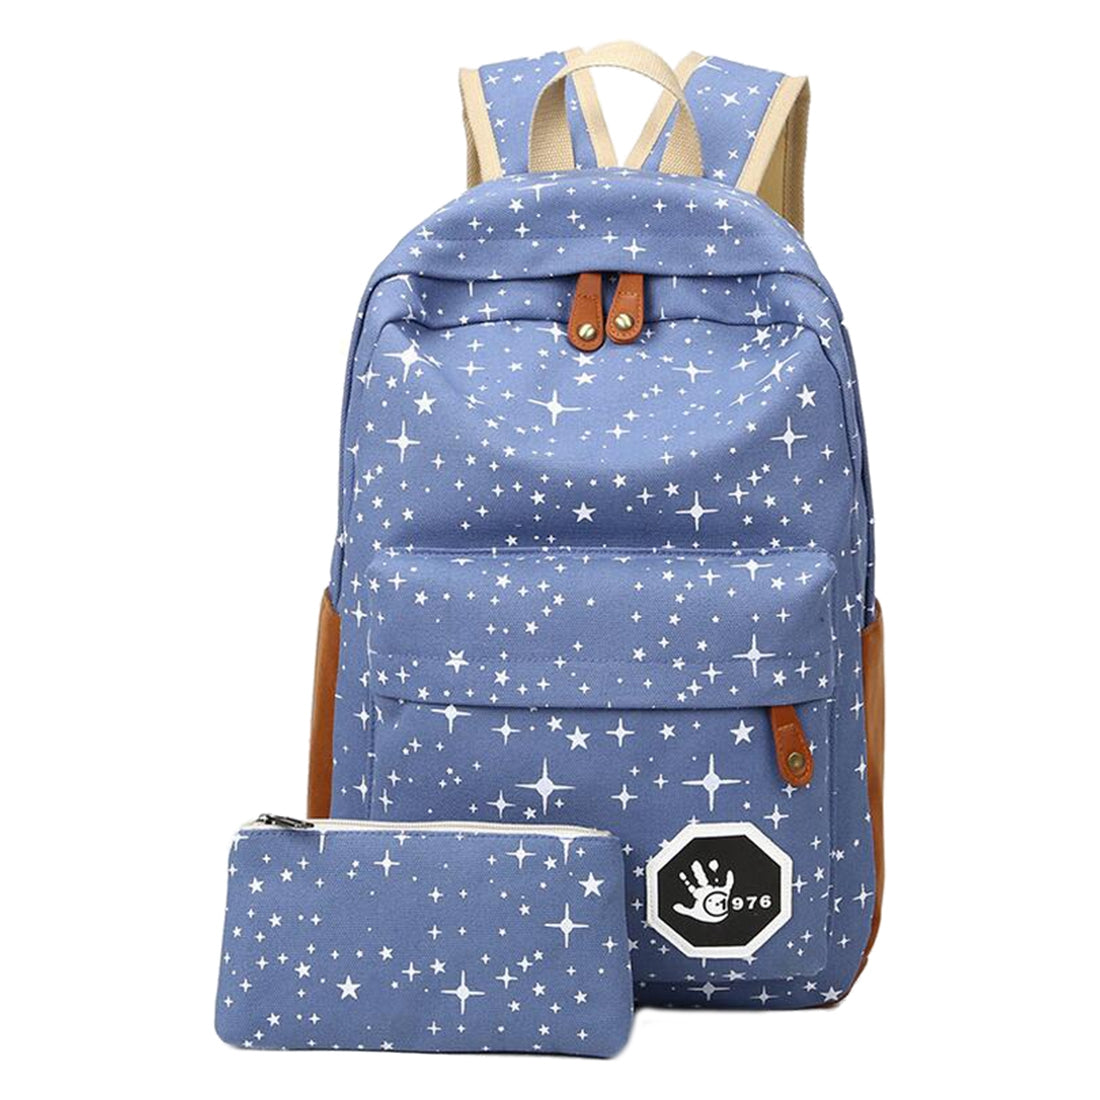 New 2 pcs/set Fashion Star Women Men Canvas Backpack School Bag For girl Boy Teenagers Casual Travel bags Rucksack - ebowsos